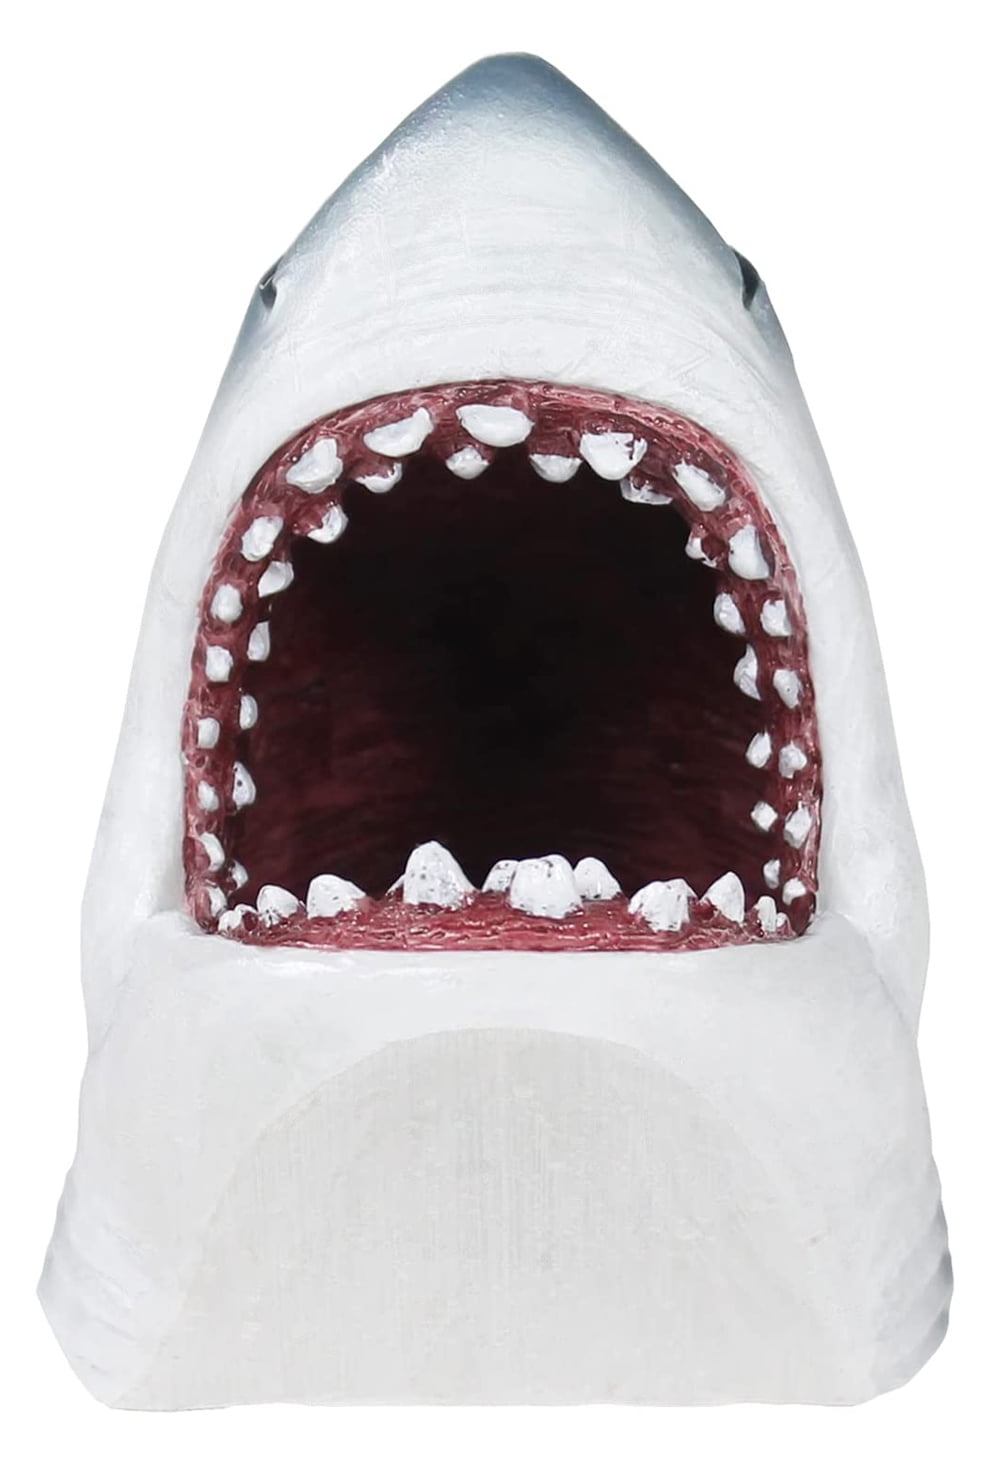 Penn-Plax Jaws Aquarium Decoration  Shark Swim-Through  Small